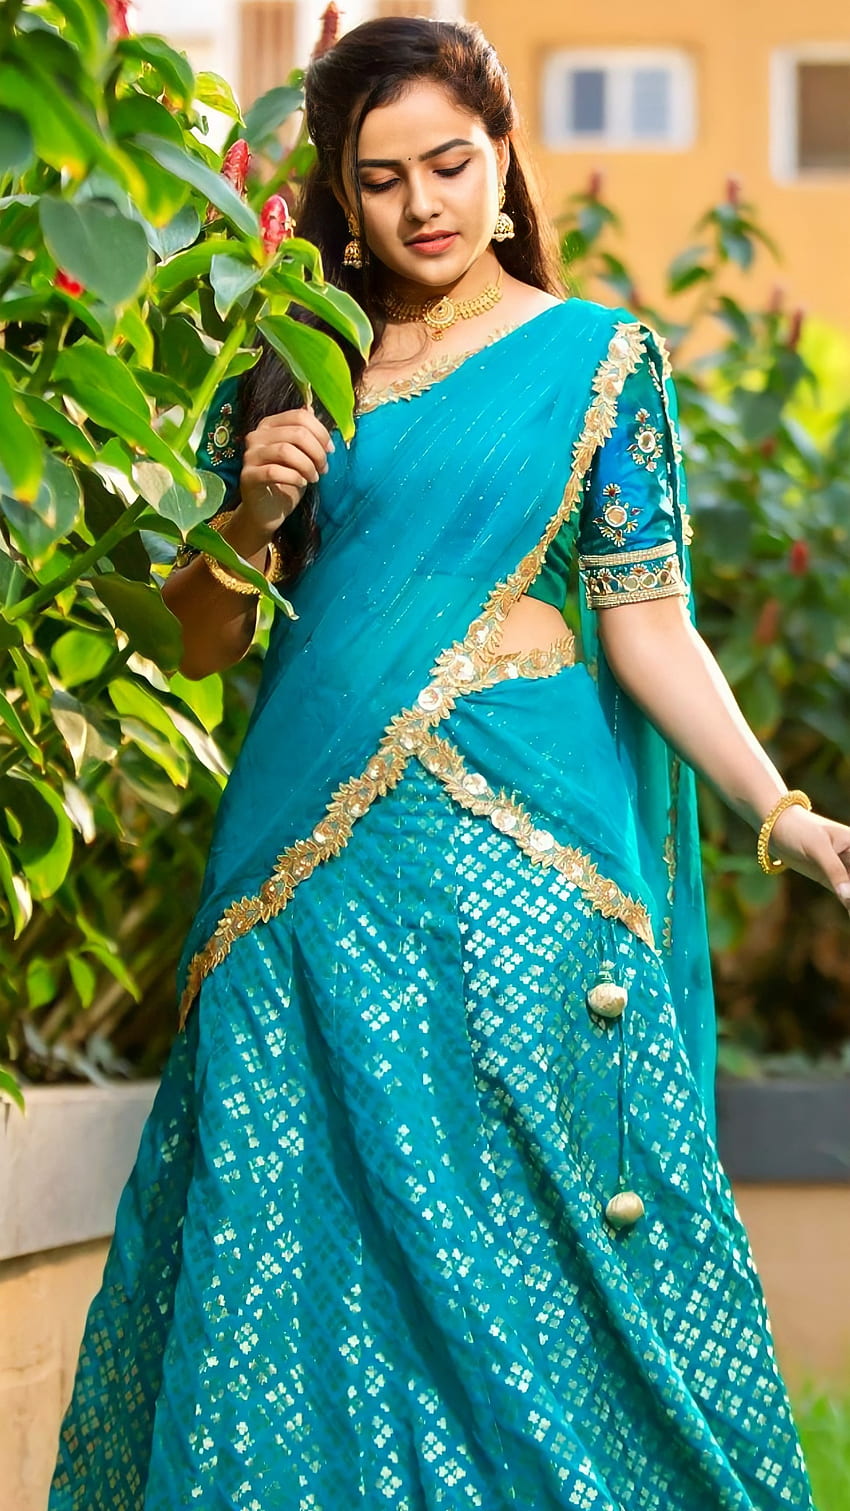 Vaishnavi czajtanja, telugu aktorka, modelka Tapeta na telefon HD